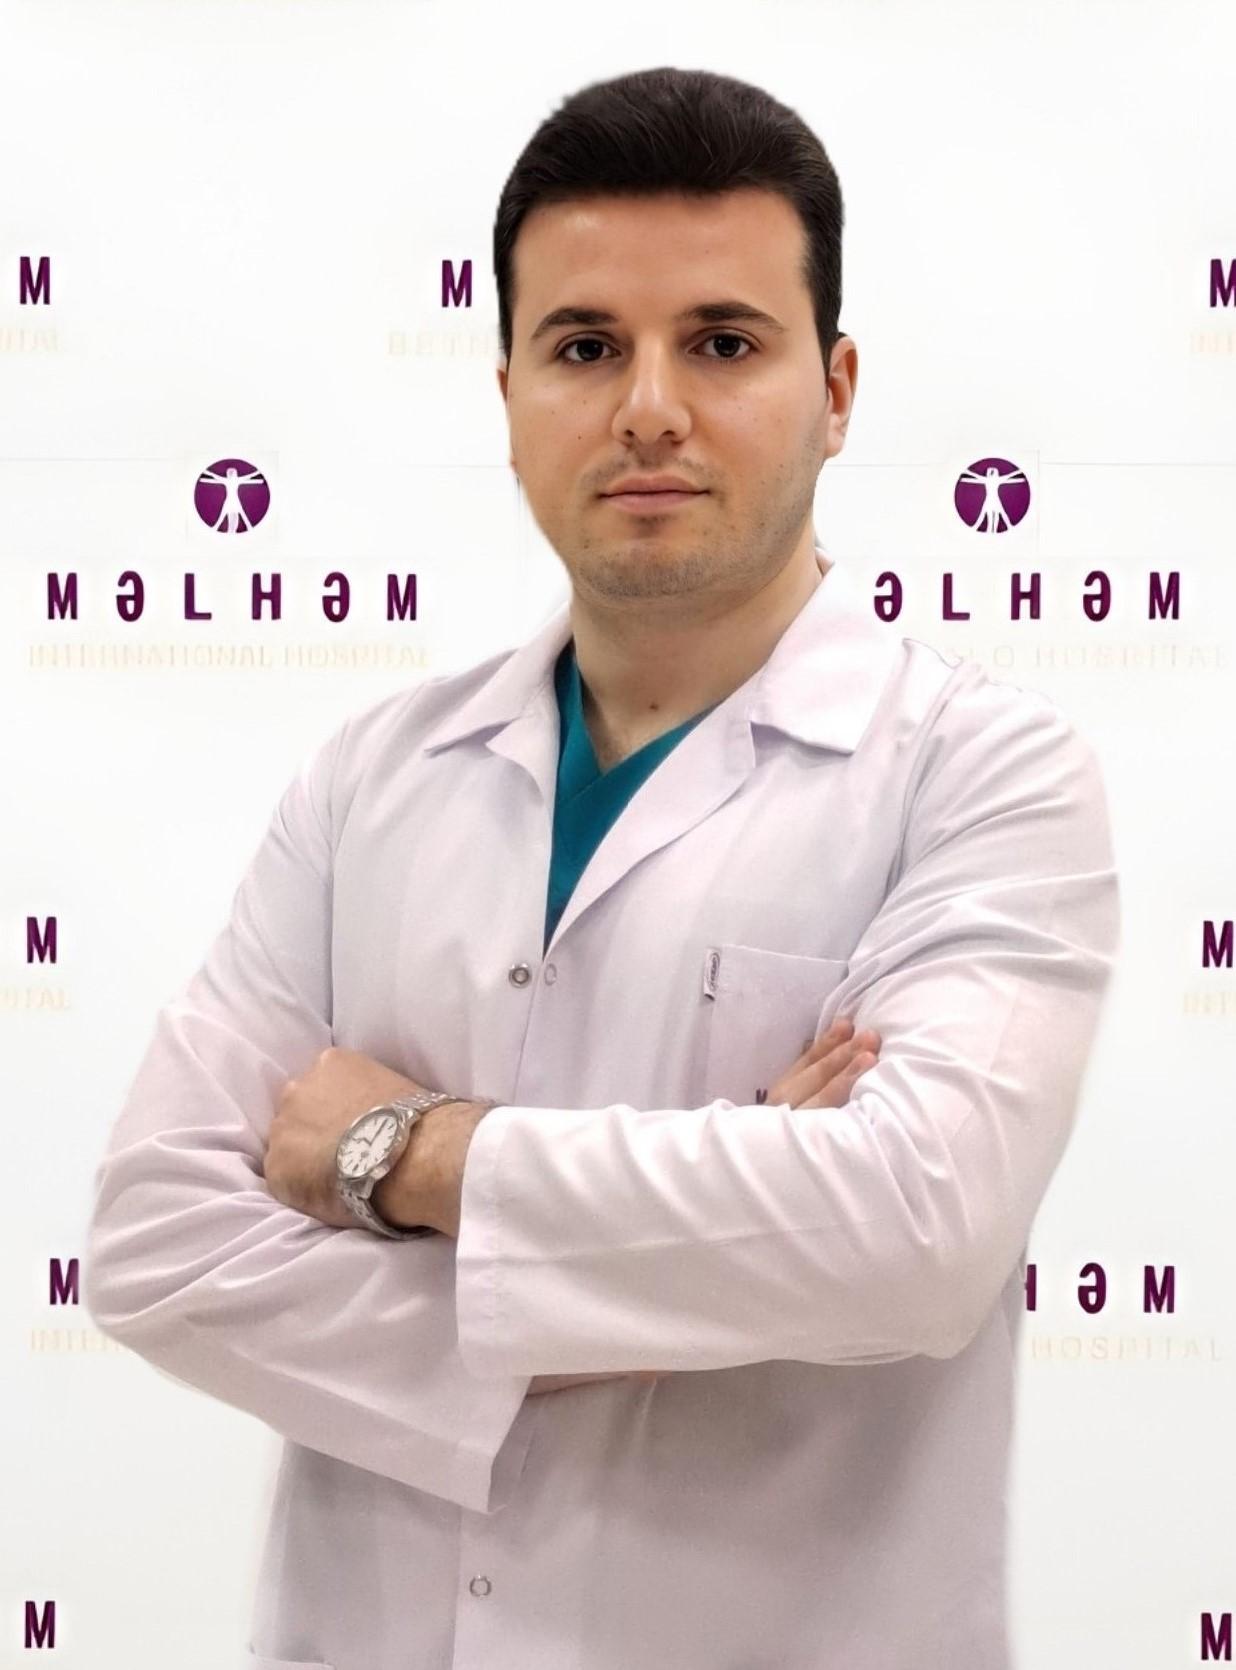 Dr. Sübhan Hacıyev